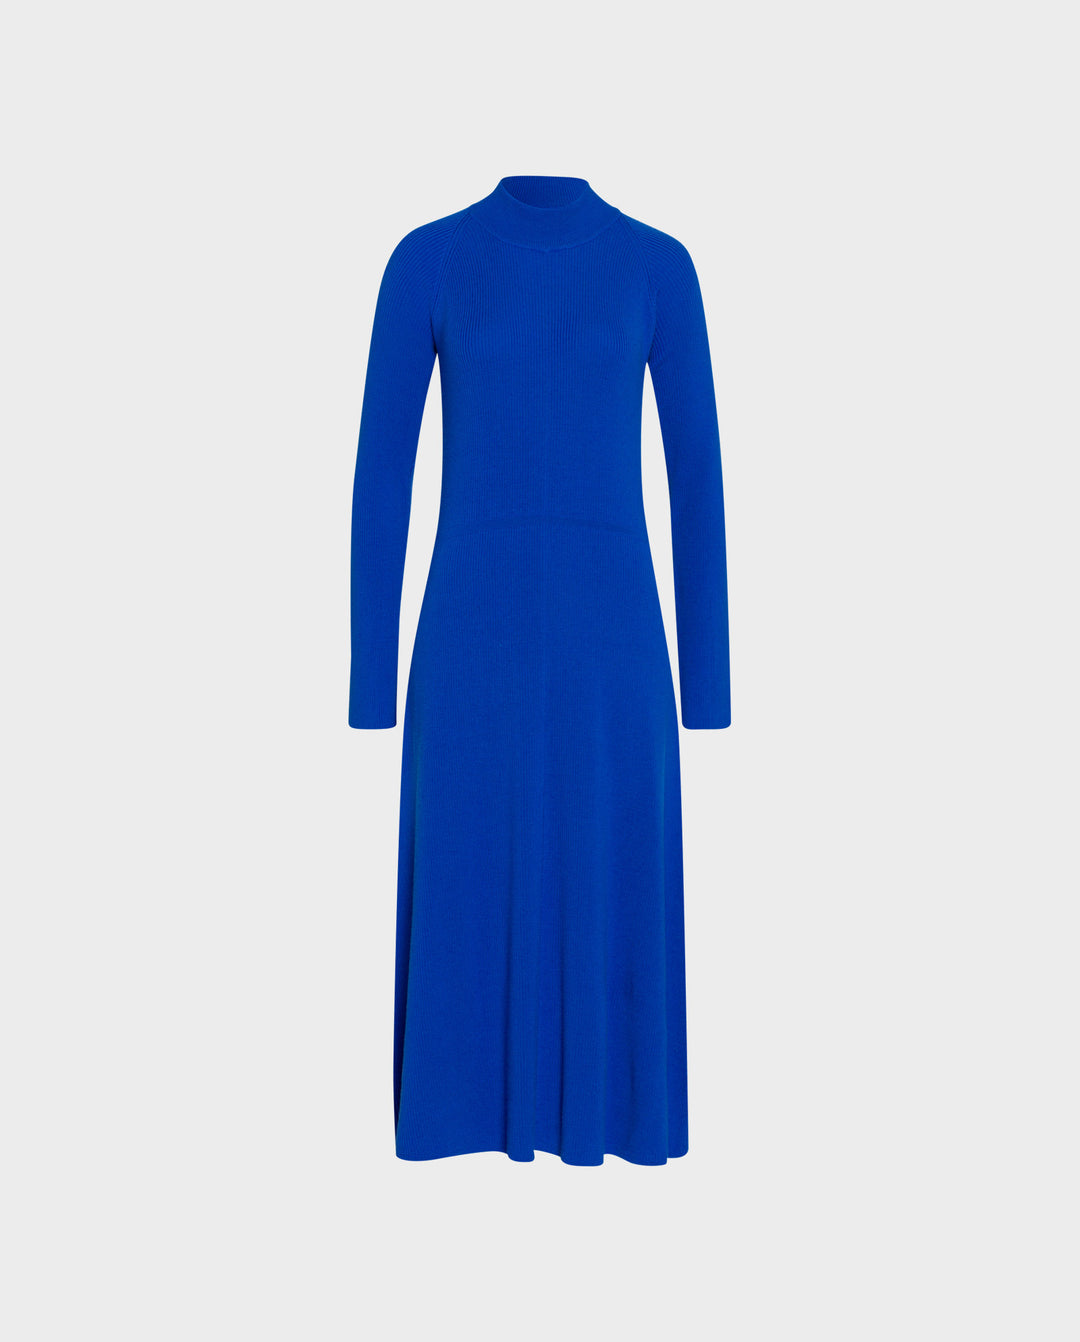 Karola rib knit dress in cobalt blue